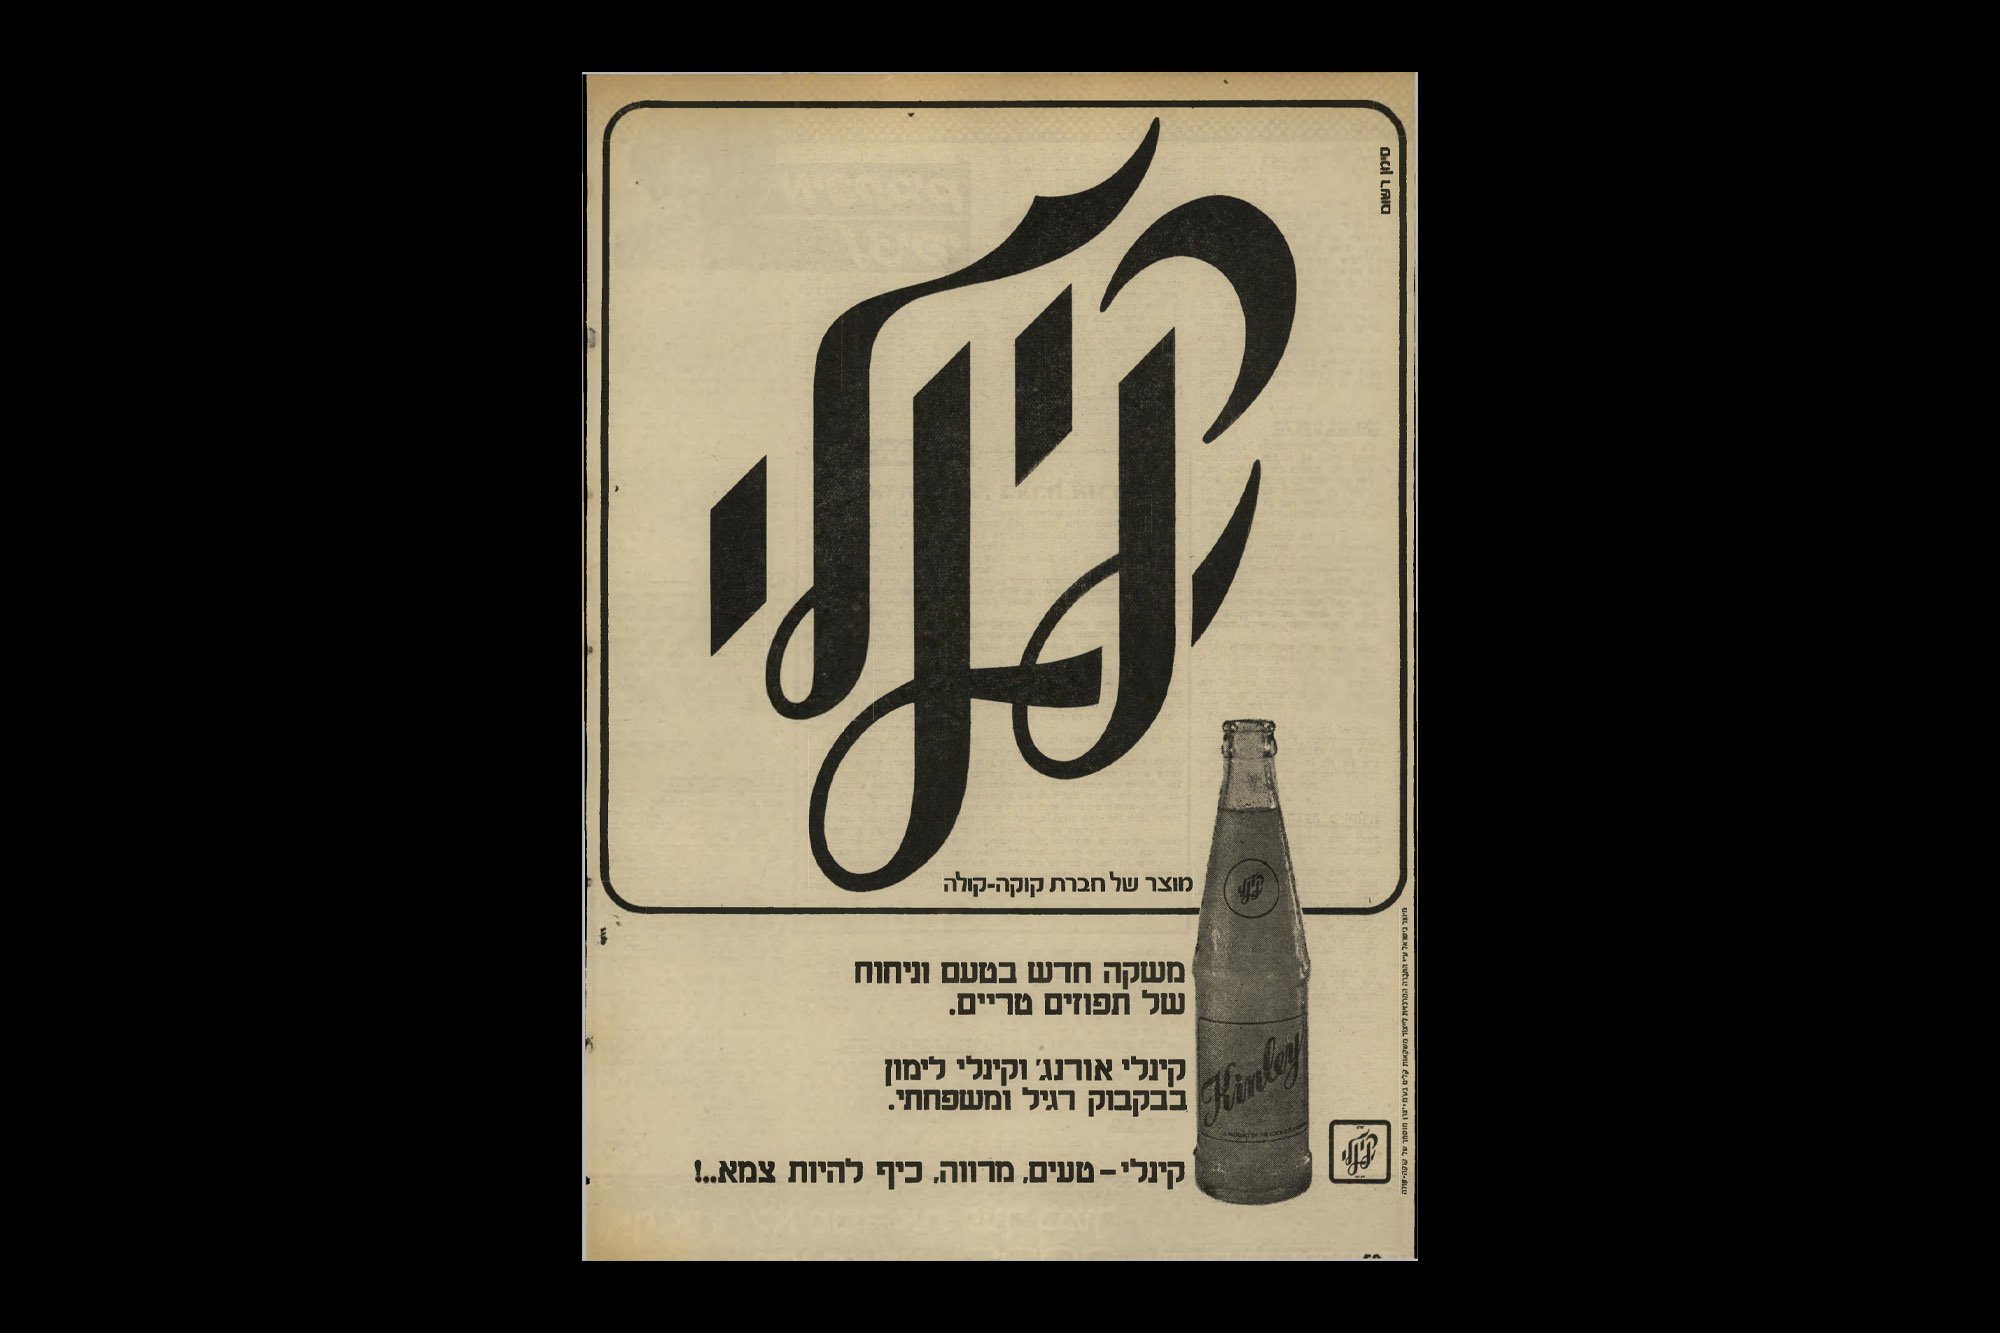  1976 Ad, introducing Kinli to the Israeli Market 